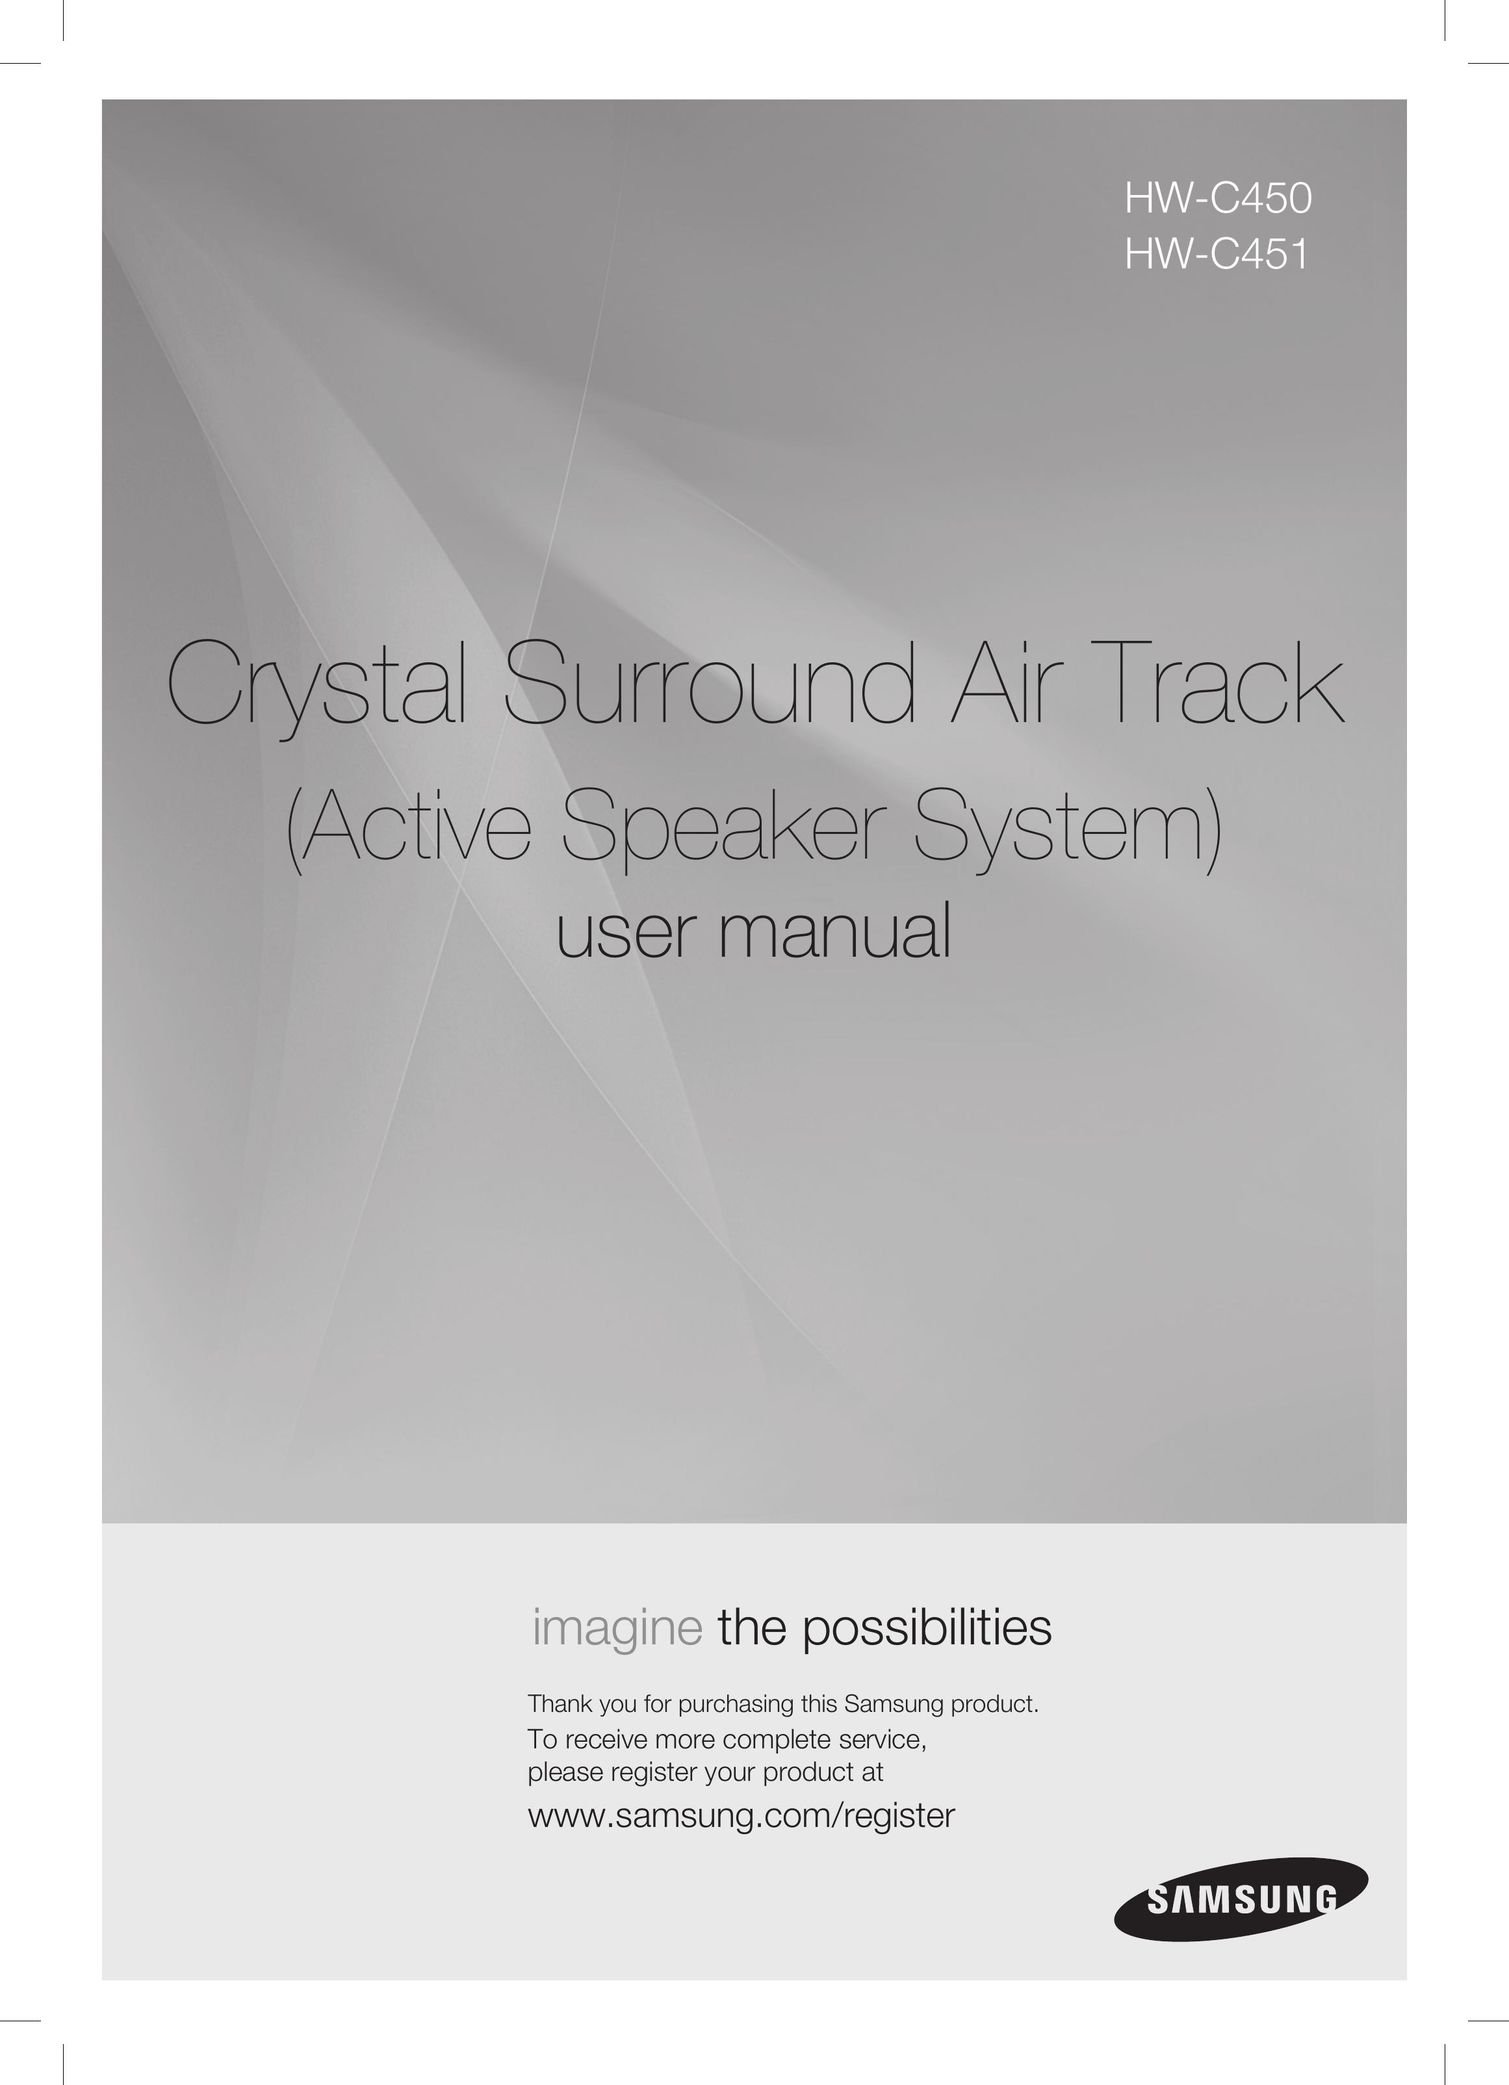 Samsung HW-C450 Speaker System User Manual